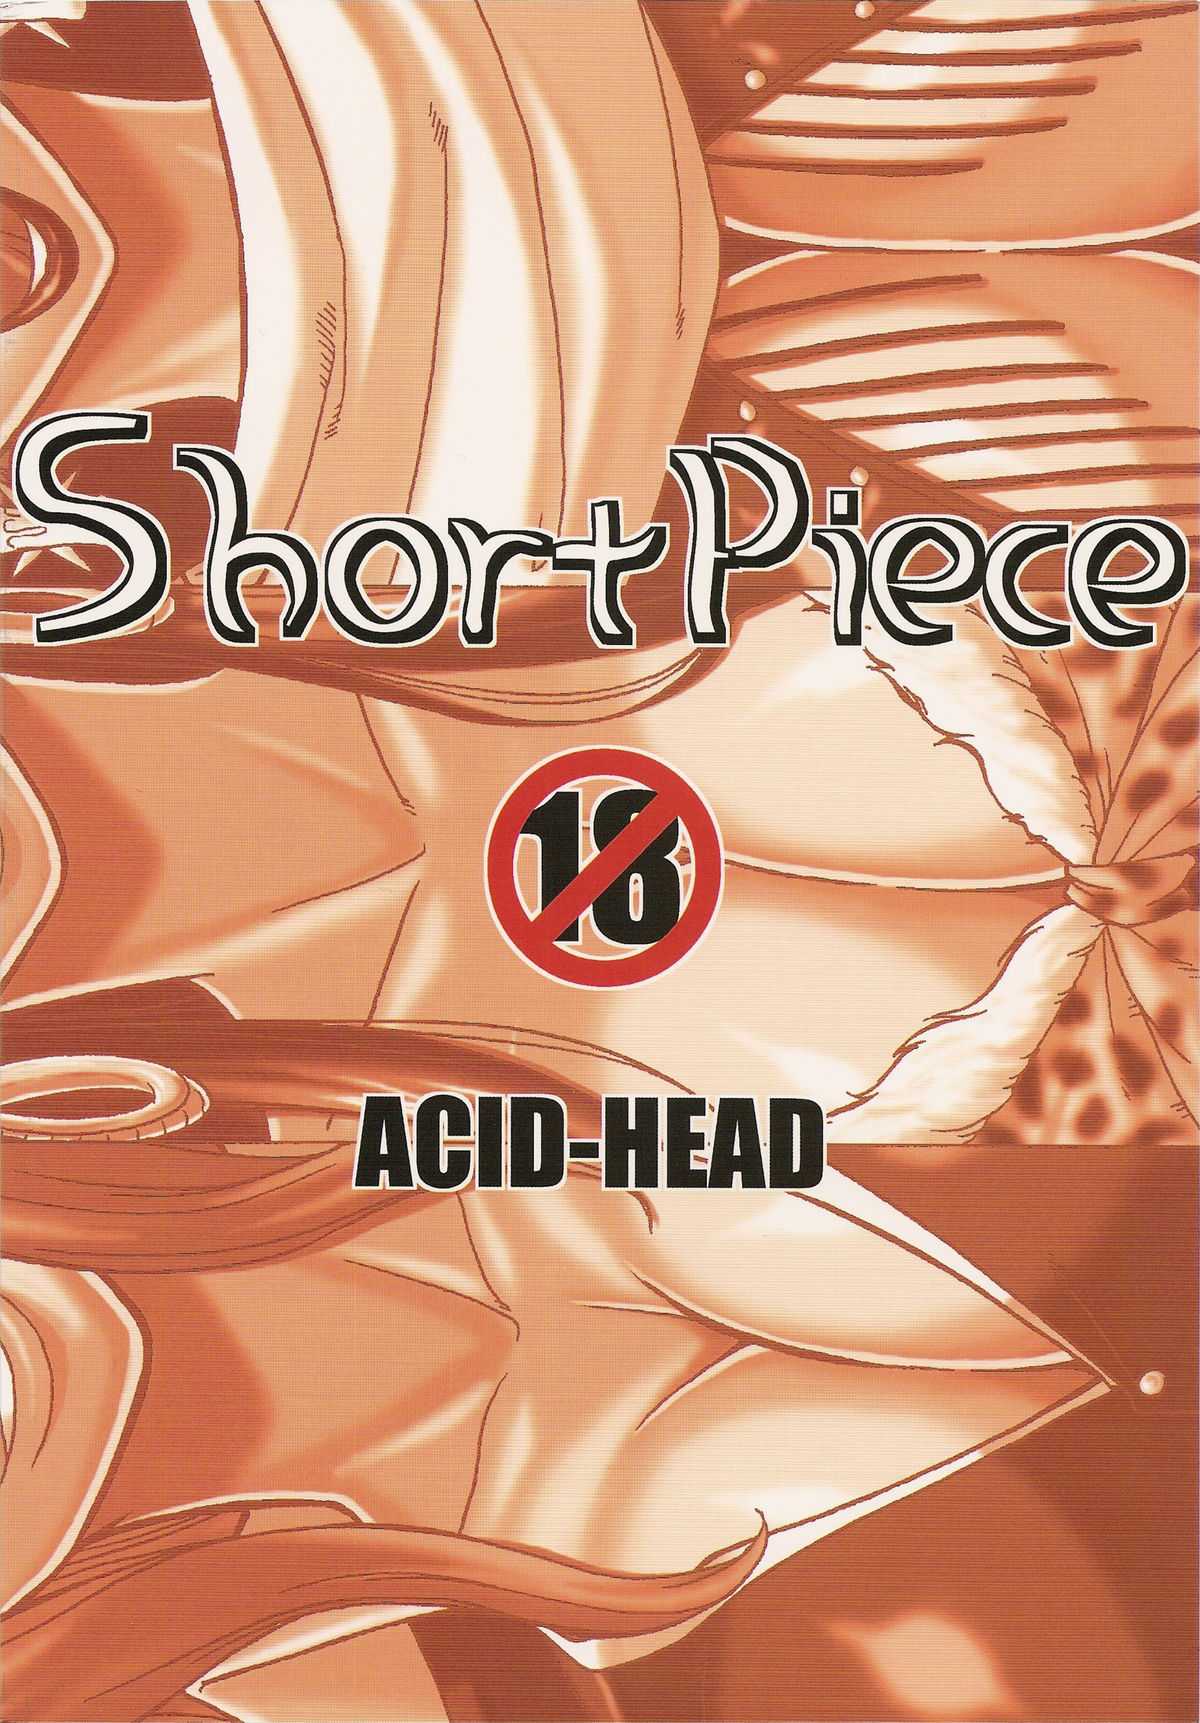 [Acid-Head] Short Piece 